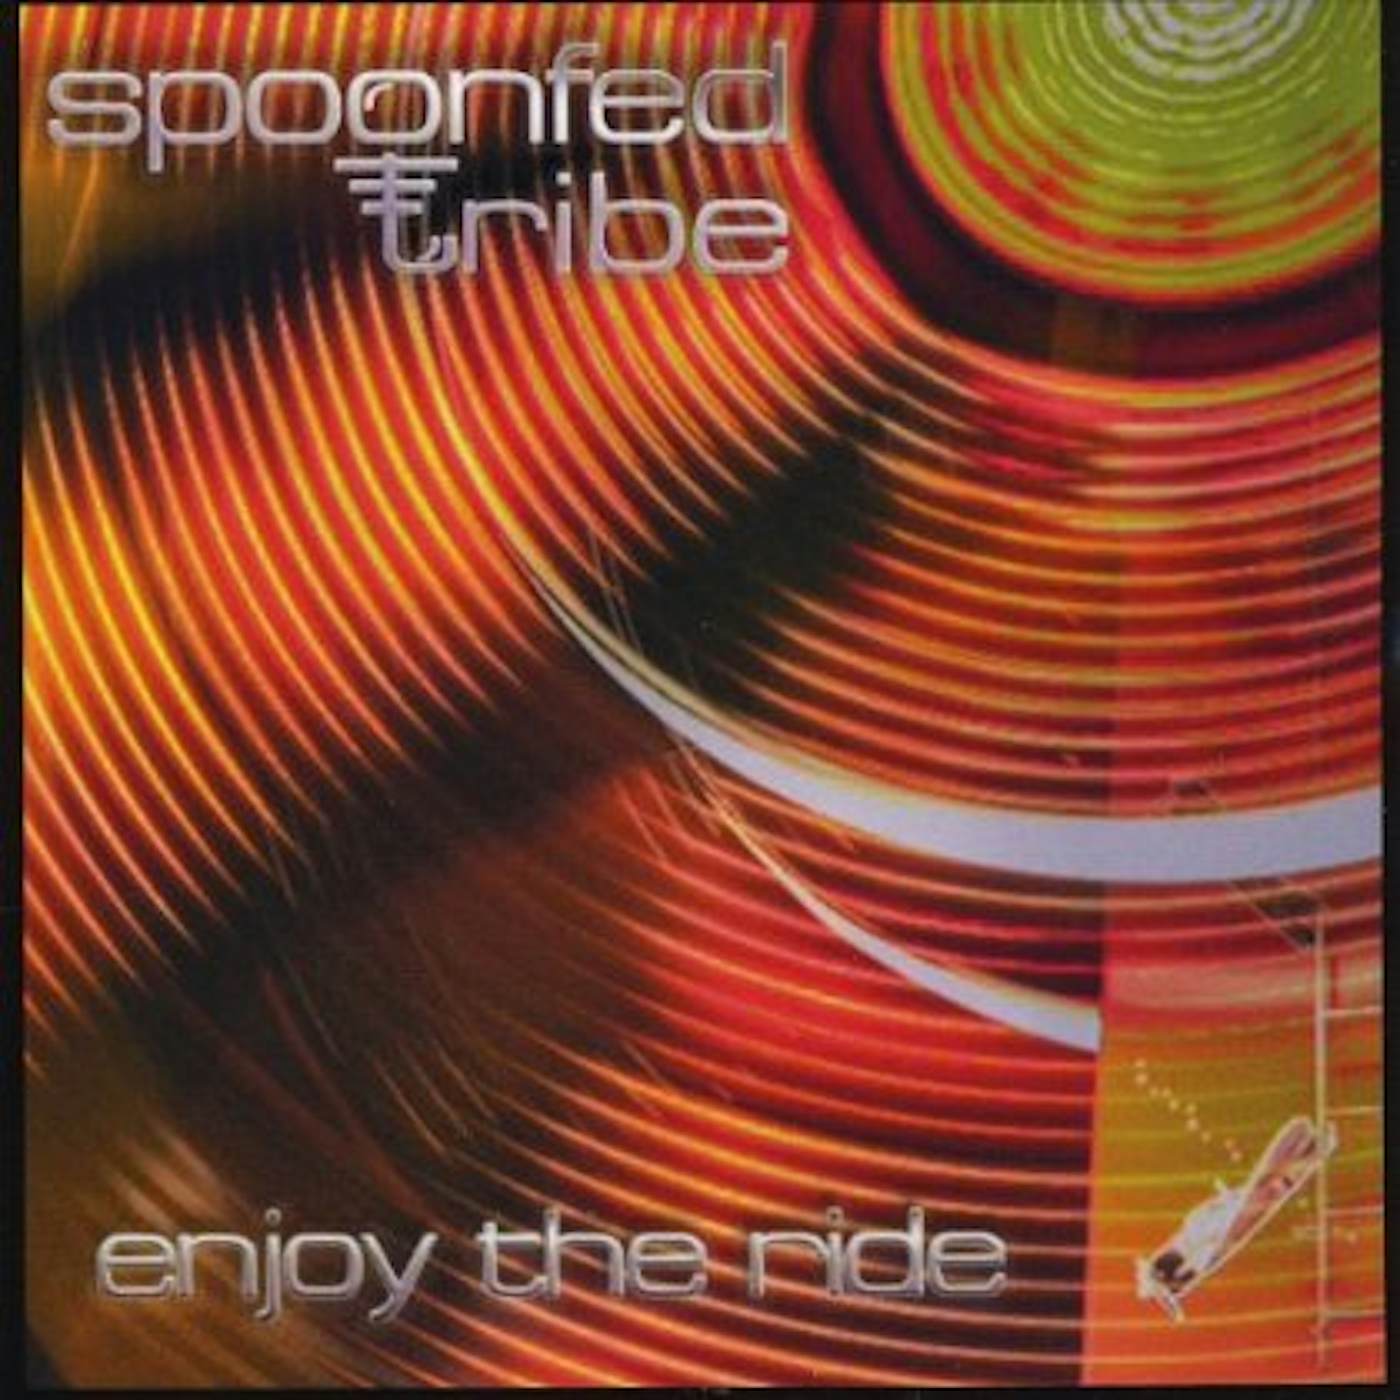 Spoonfed Tribe ENJOY THE RIDE CD